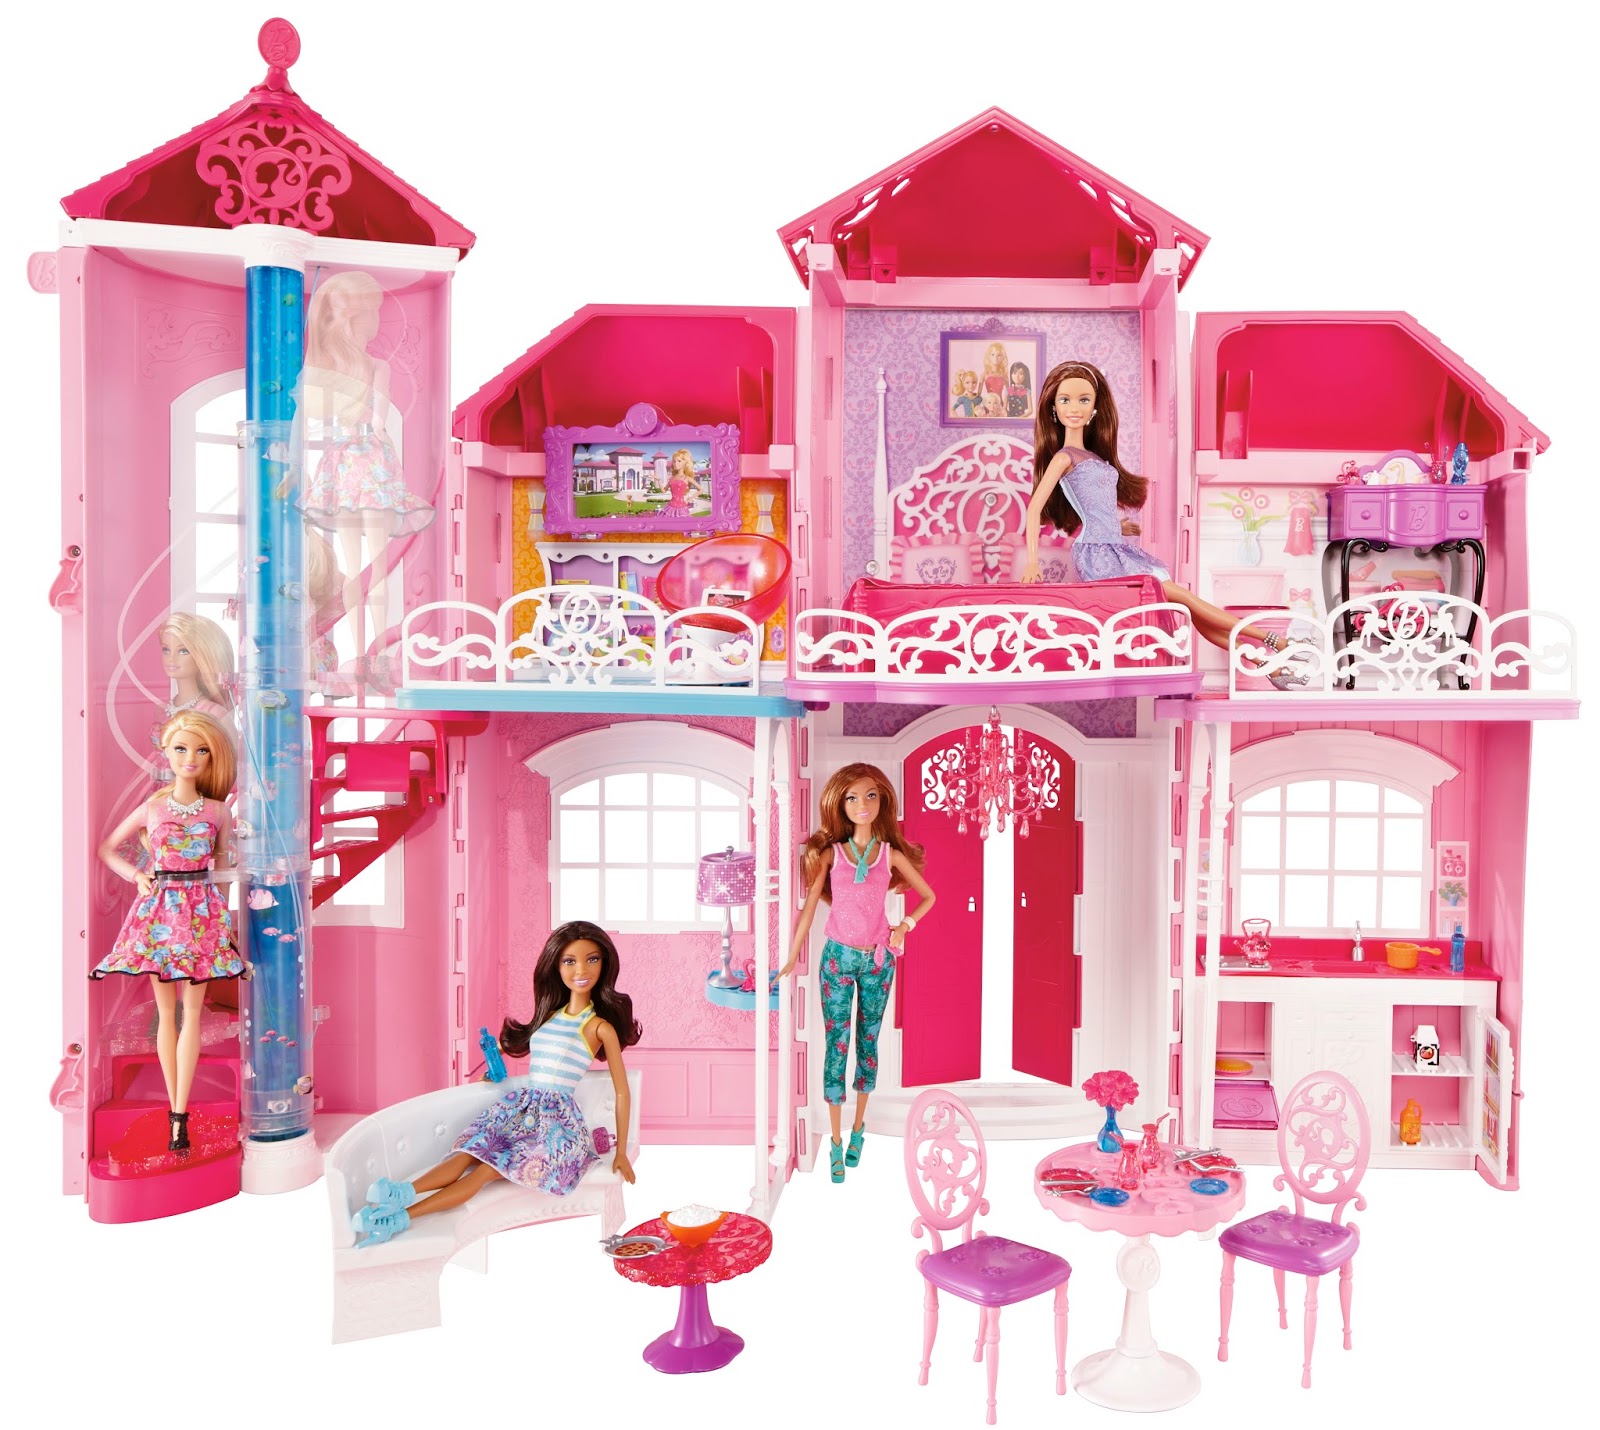 Барби дом 1. Дом Барби «Малибу». Кукольный дом Барби Malibu. Кукольный домик для Барби Малибу. Барби кукла дом мечты Барби Малибу.